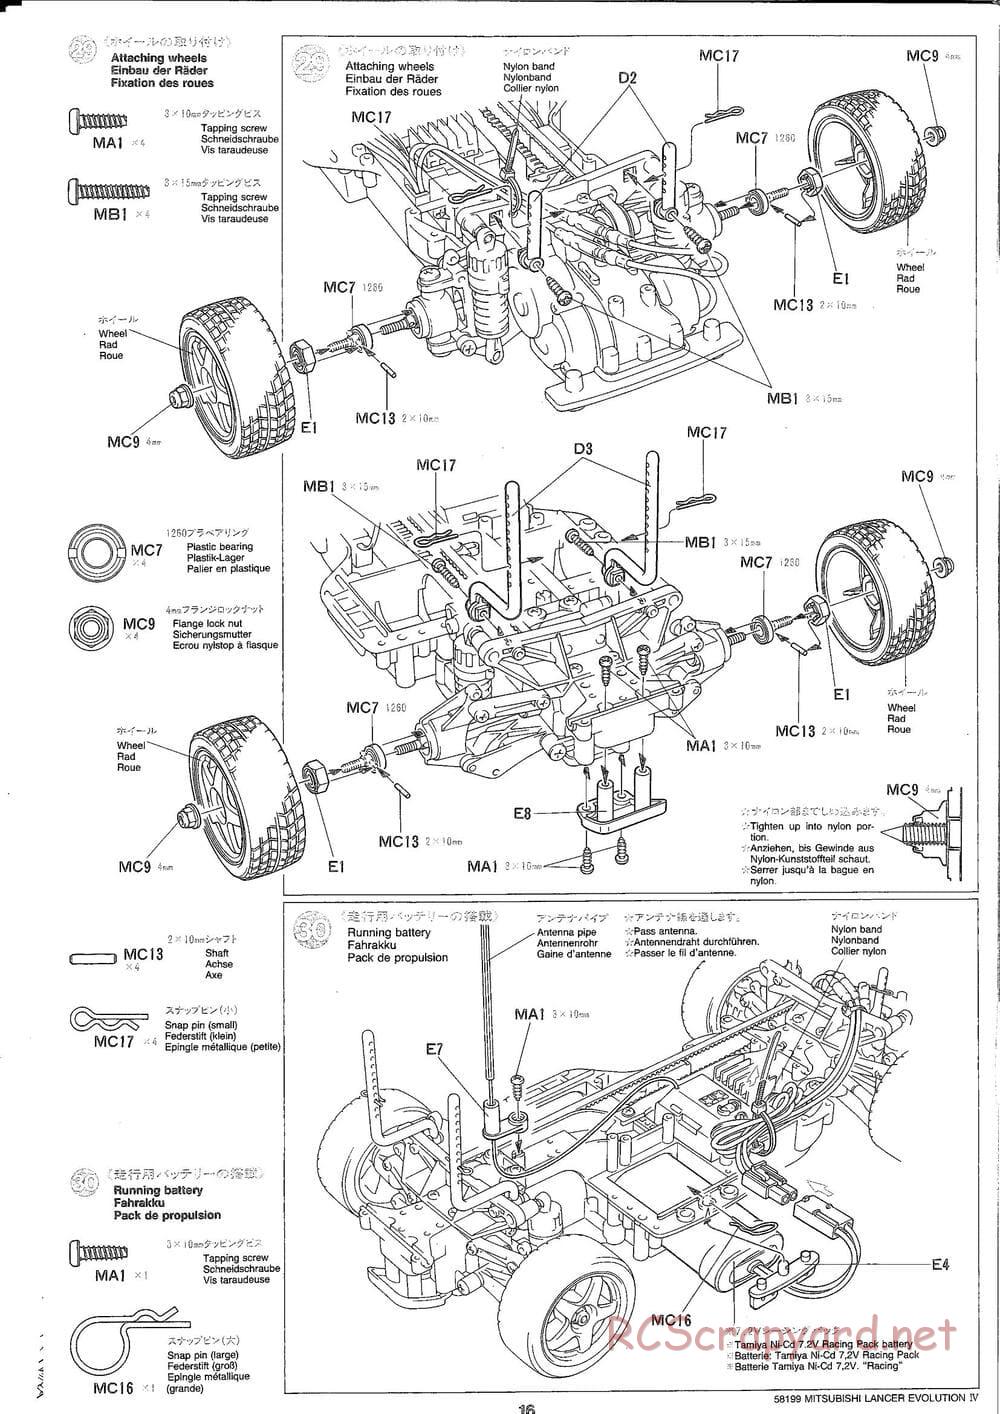 Tamiya - Mitsubishi Lancer Evolution IV - TA-03F Chassis - Manual - Page 16